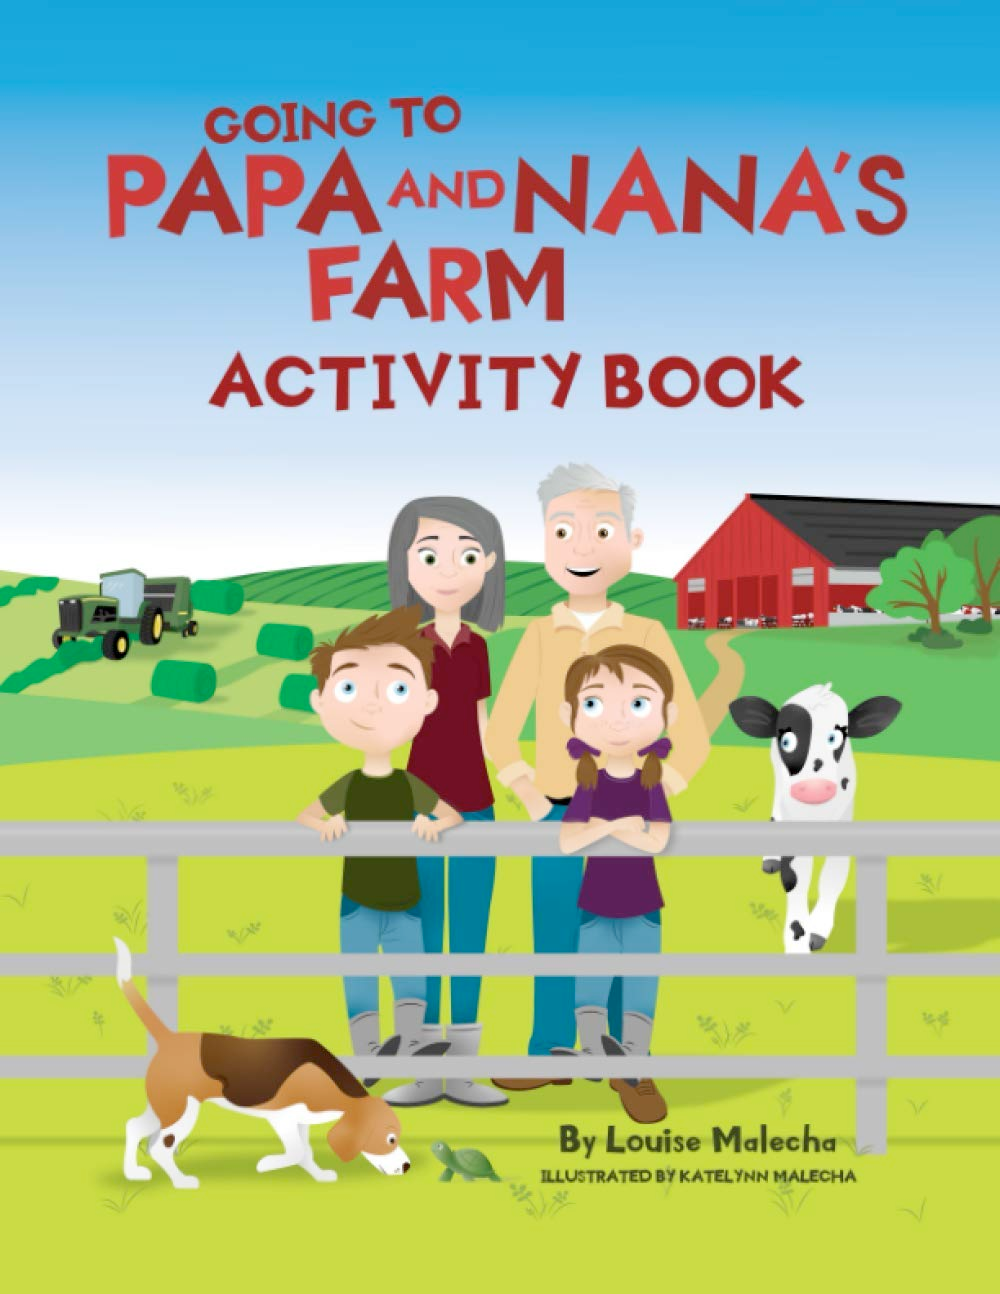 Activity Book - Going to Papa and Nana's Farm